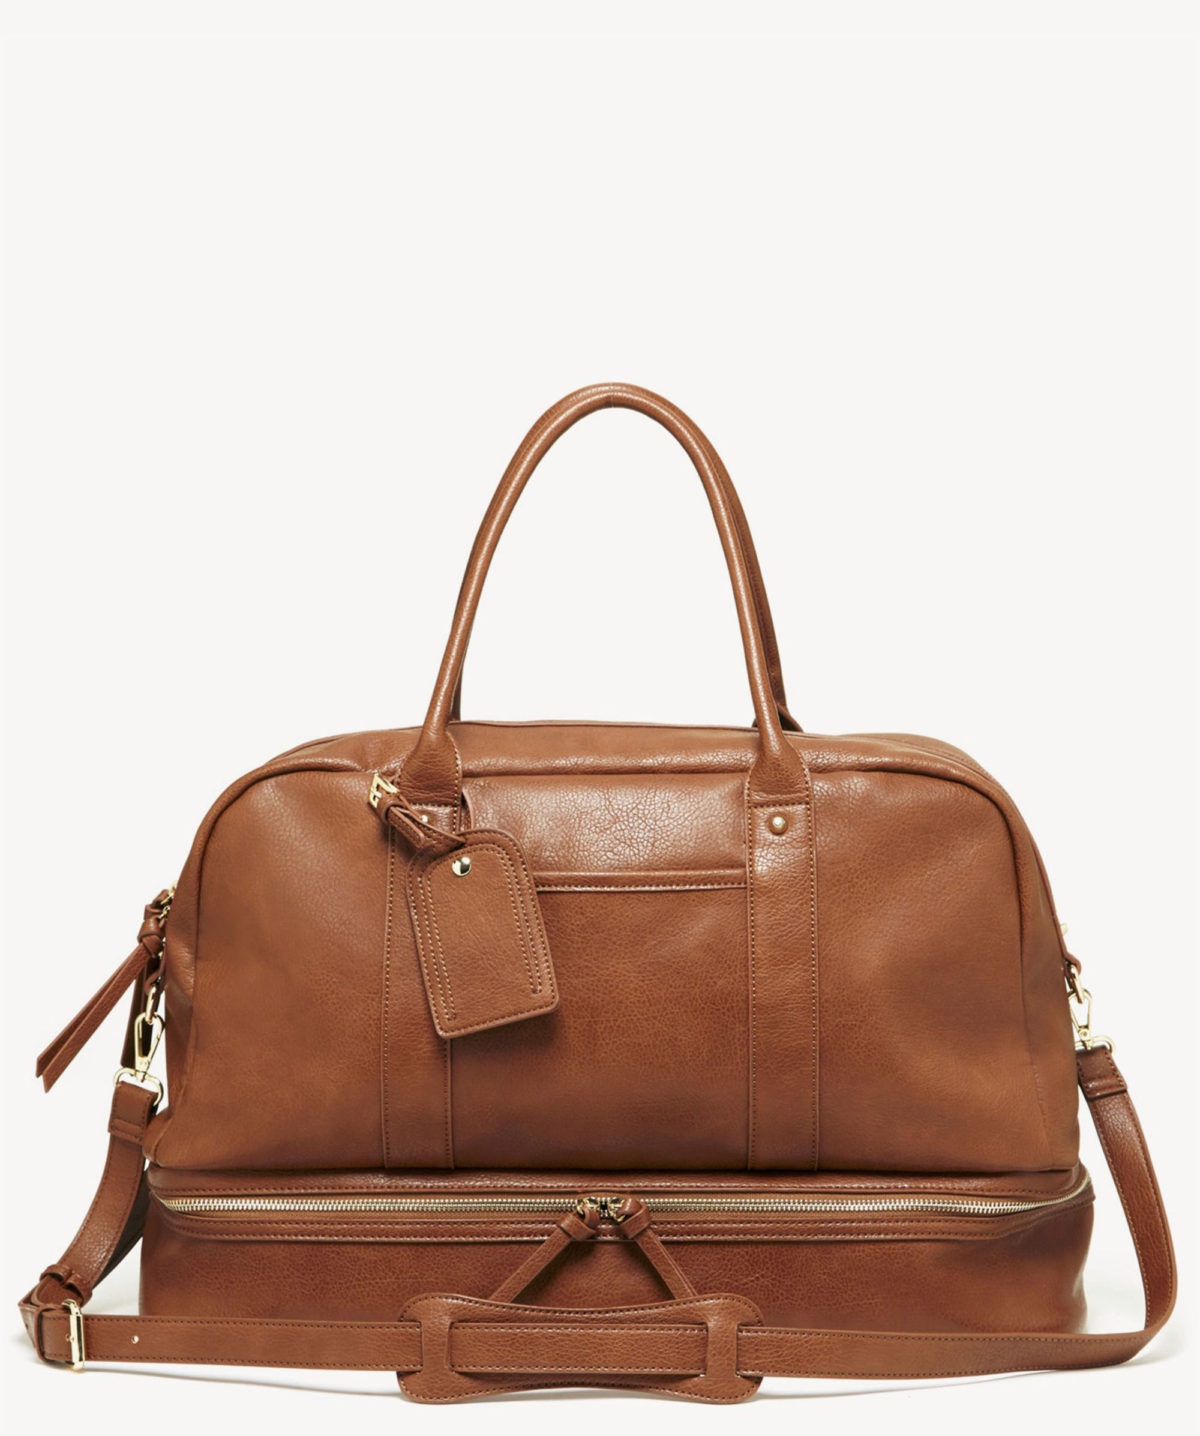 :: The Best Travel Bag + LDW Sales ::